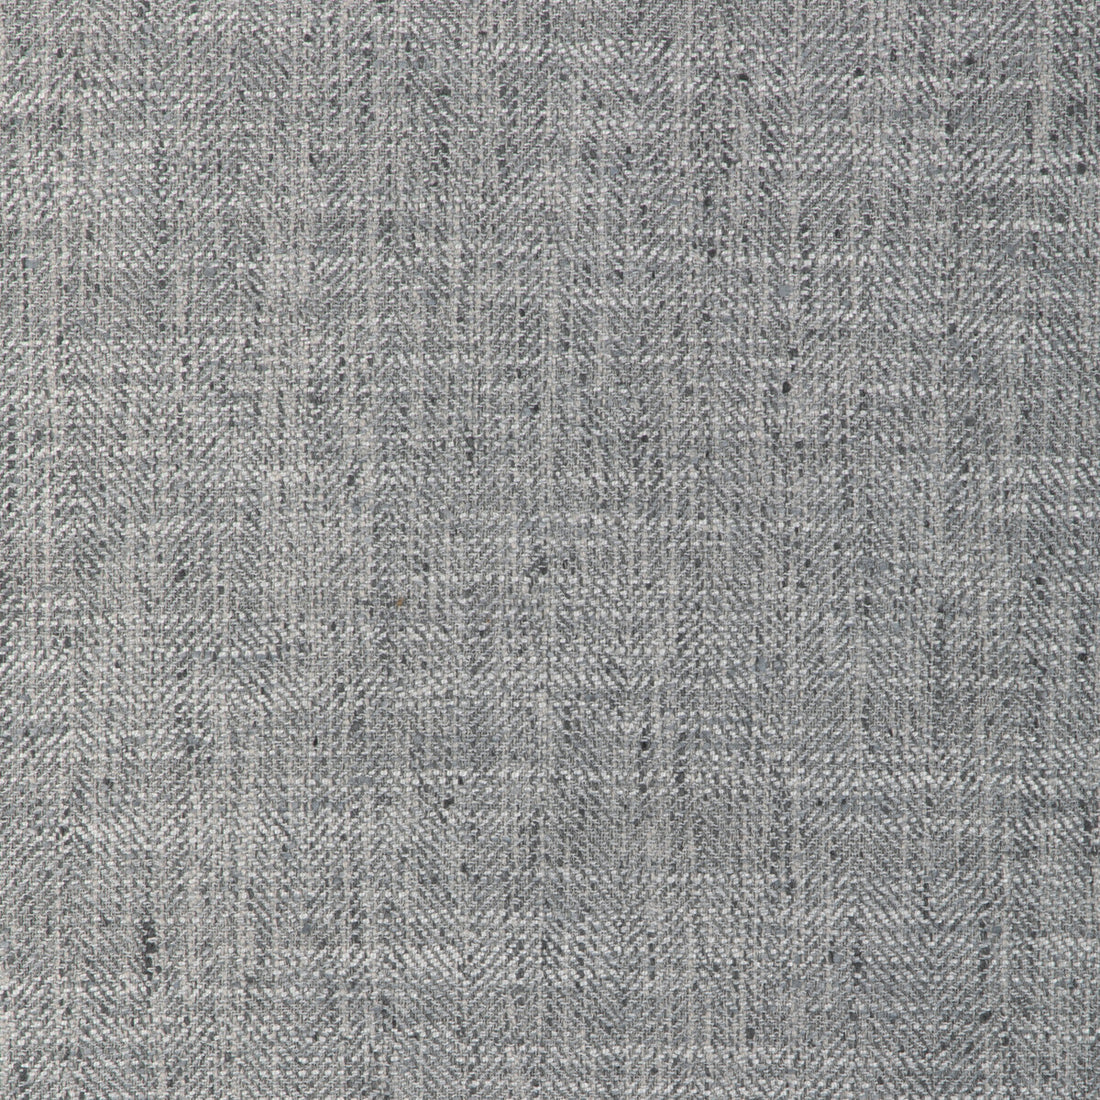 Kravet Smart fabric in 36674-1101 color - pattern 36674.1101.0 - by Kravet Smart in the Performance Kravetarmor collection